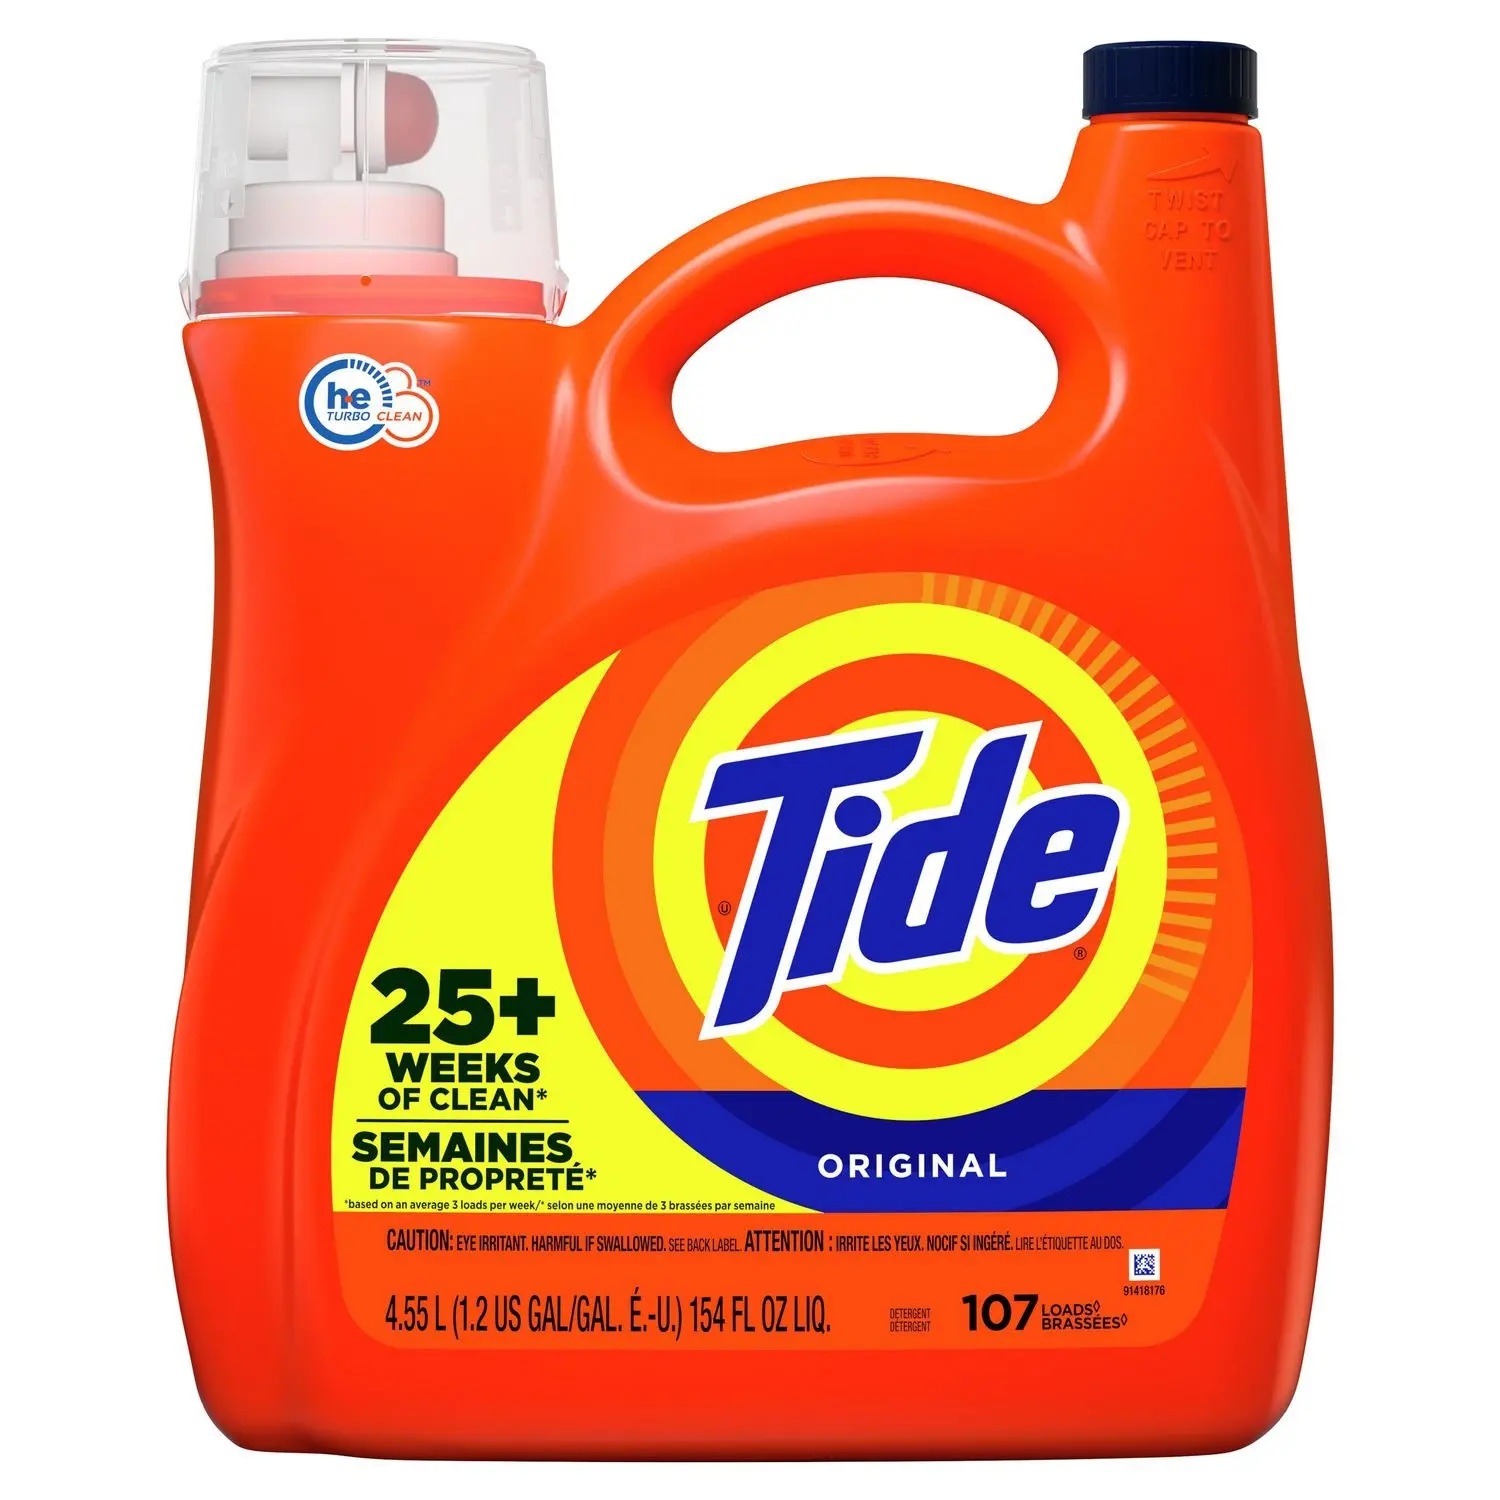 Sabun cair Laundry Tide, efisiensi tinggi (dia), aroma asli, 64 beban